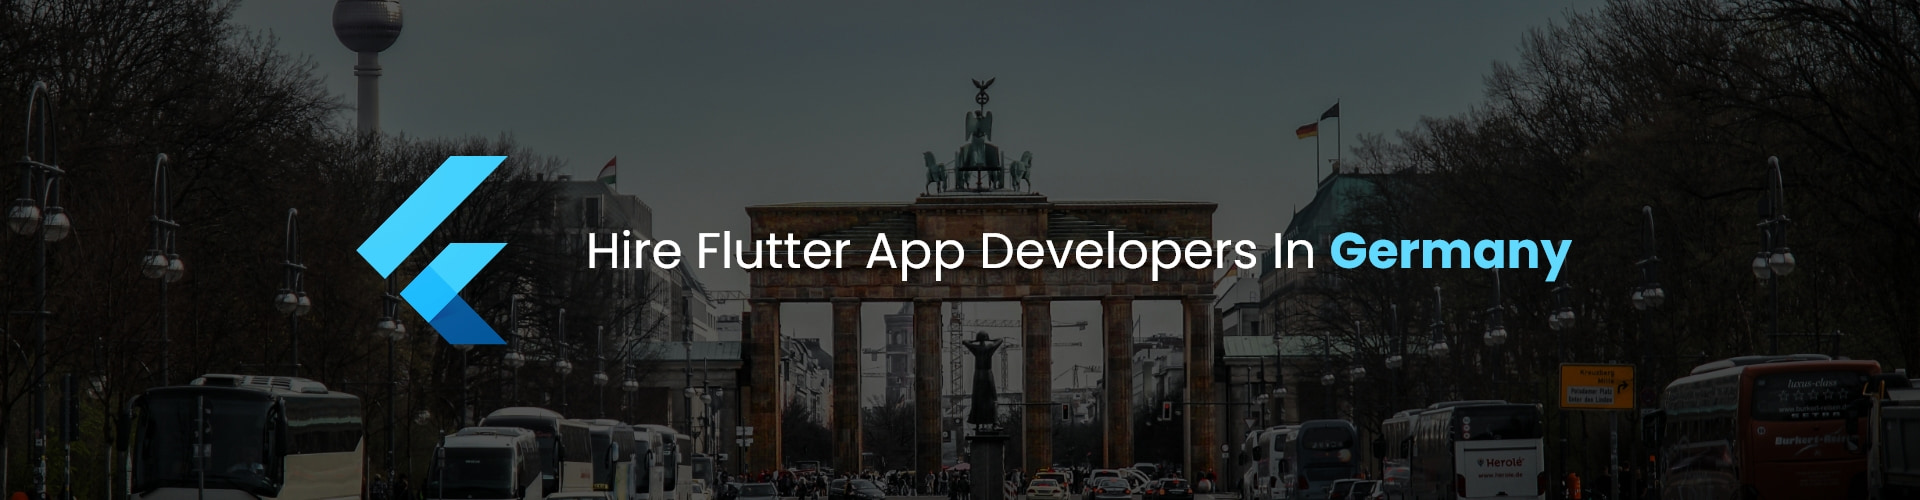 hire flutter app developers in germany